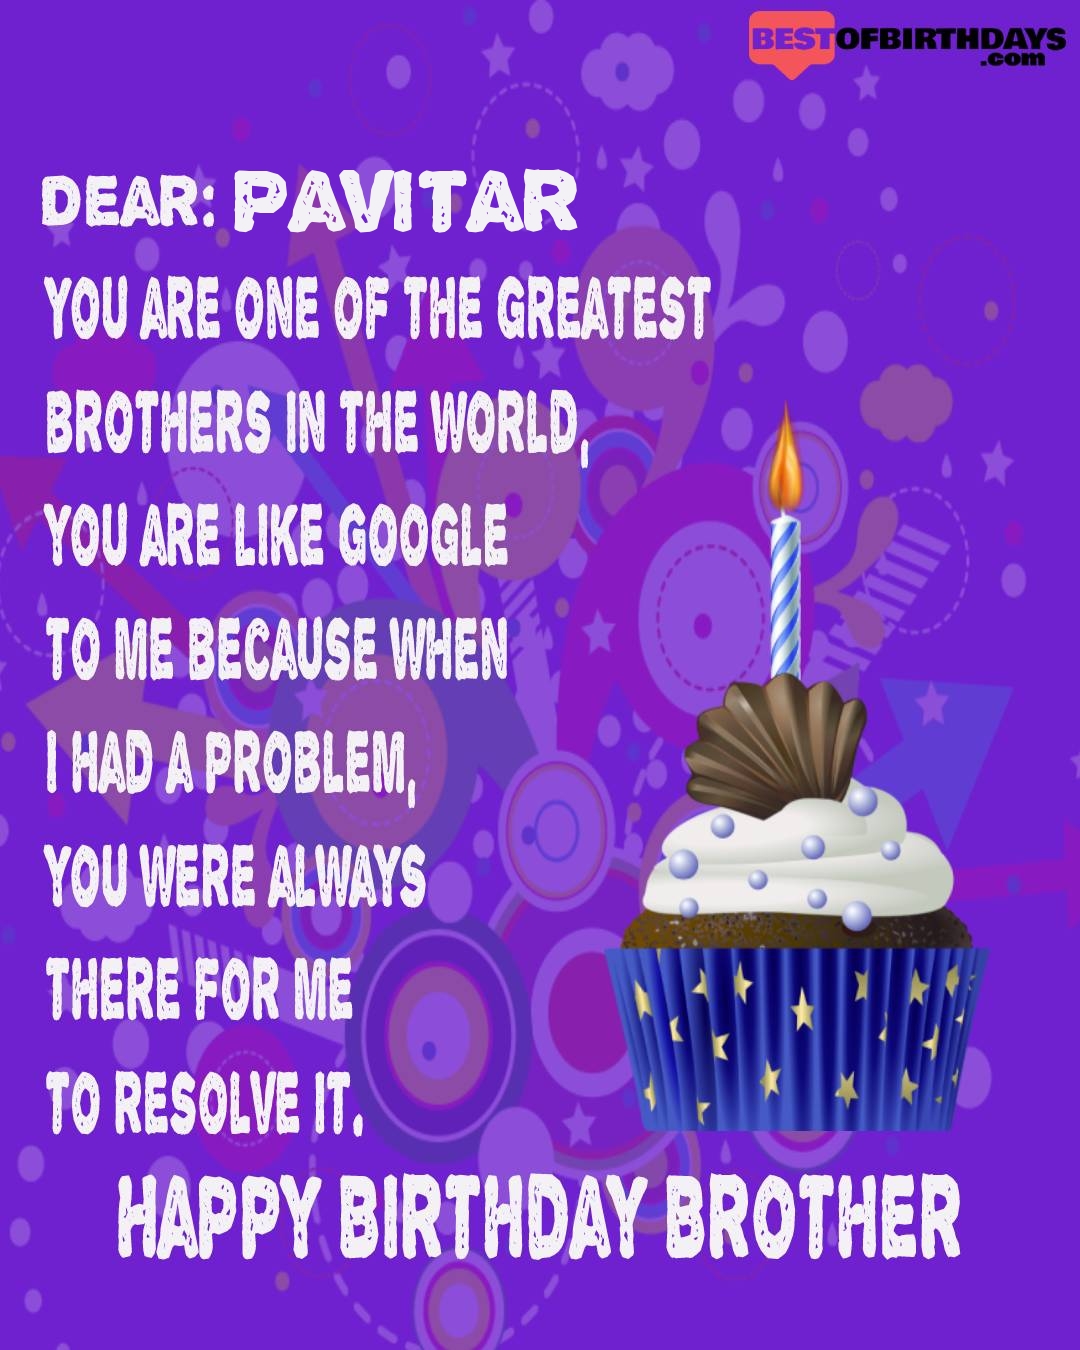 Happy birthday pavitar bhai brother bro